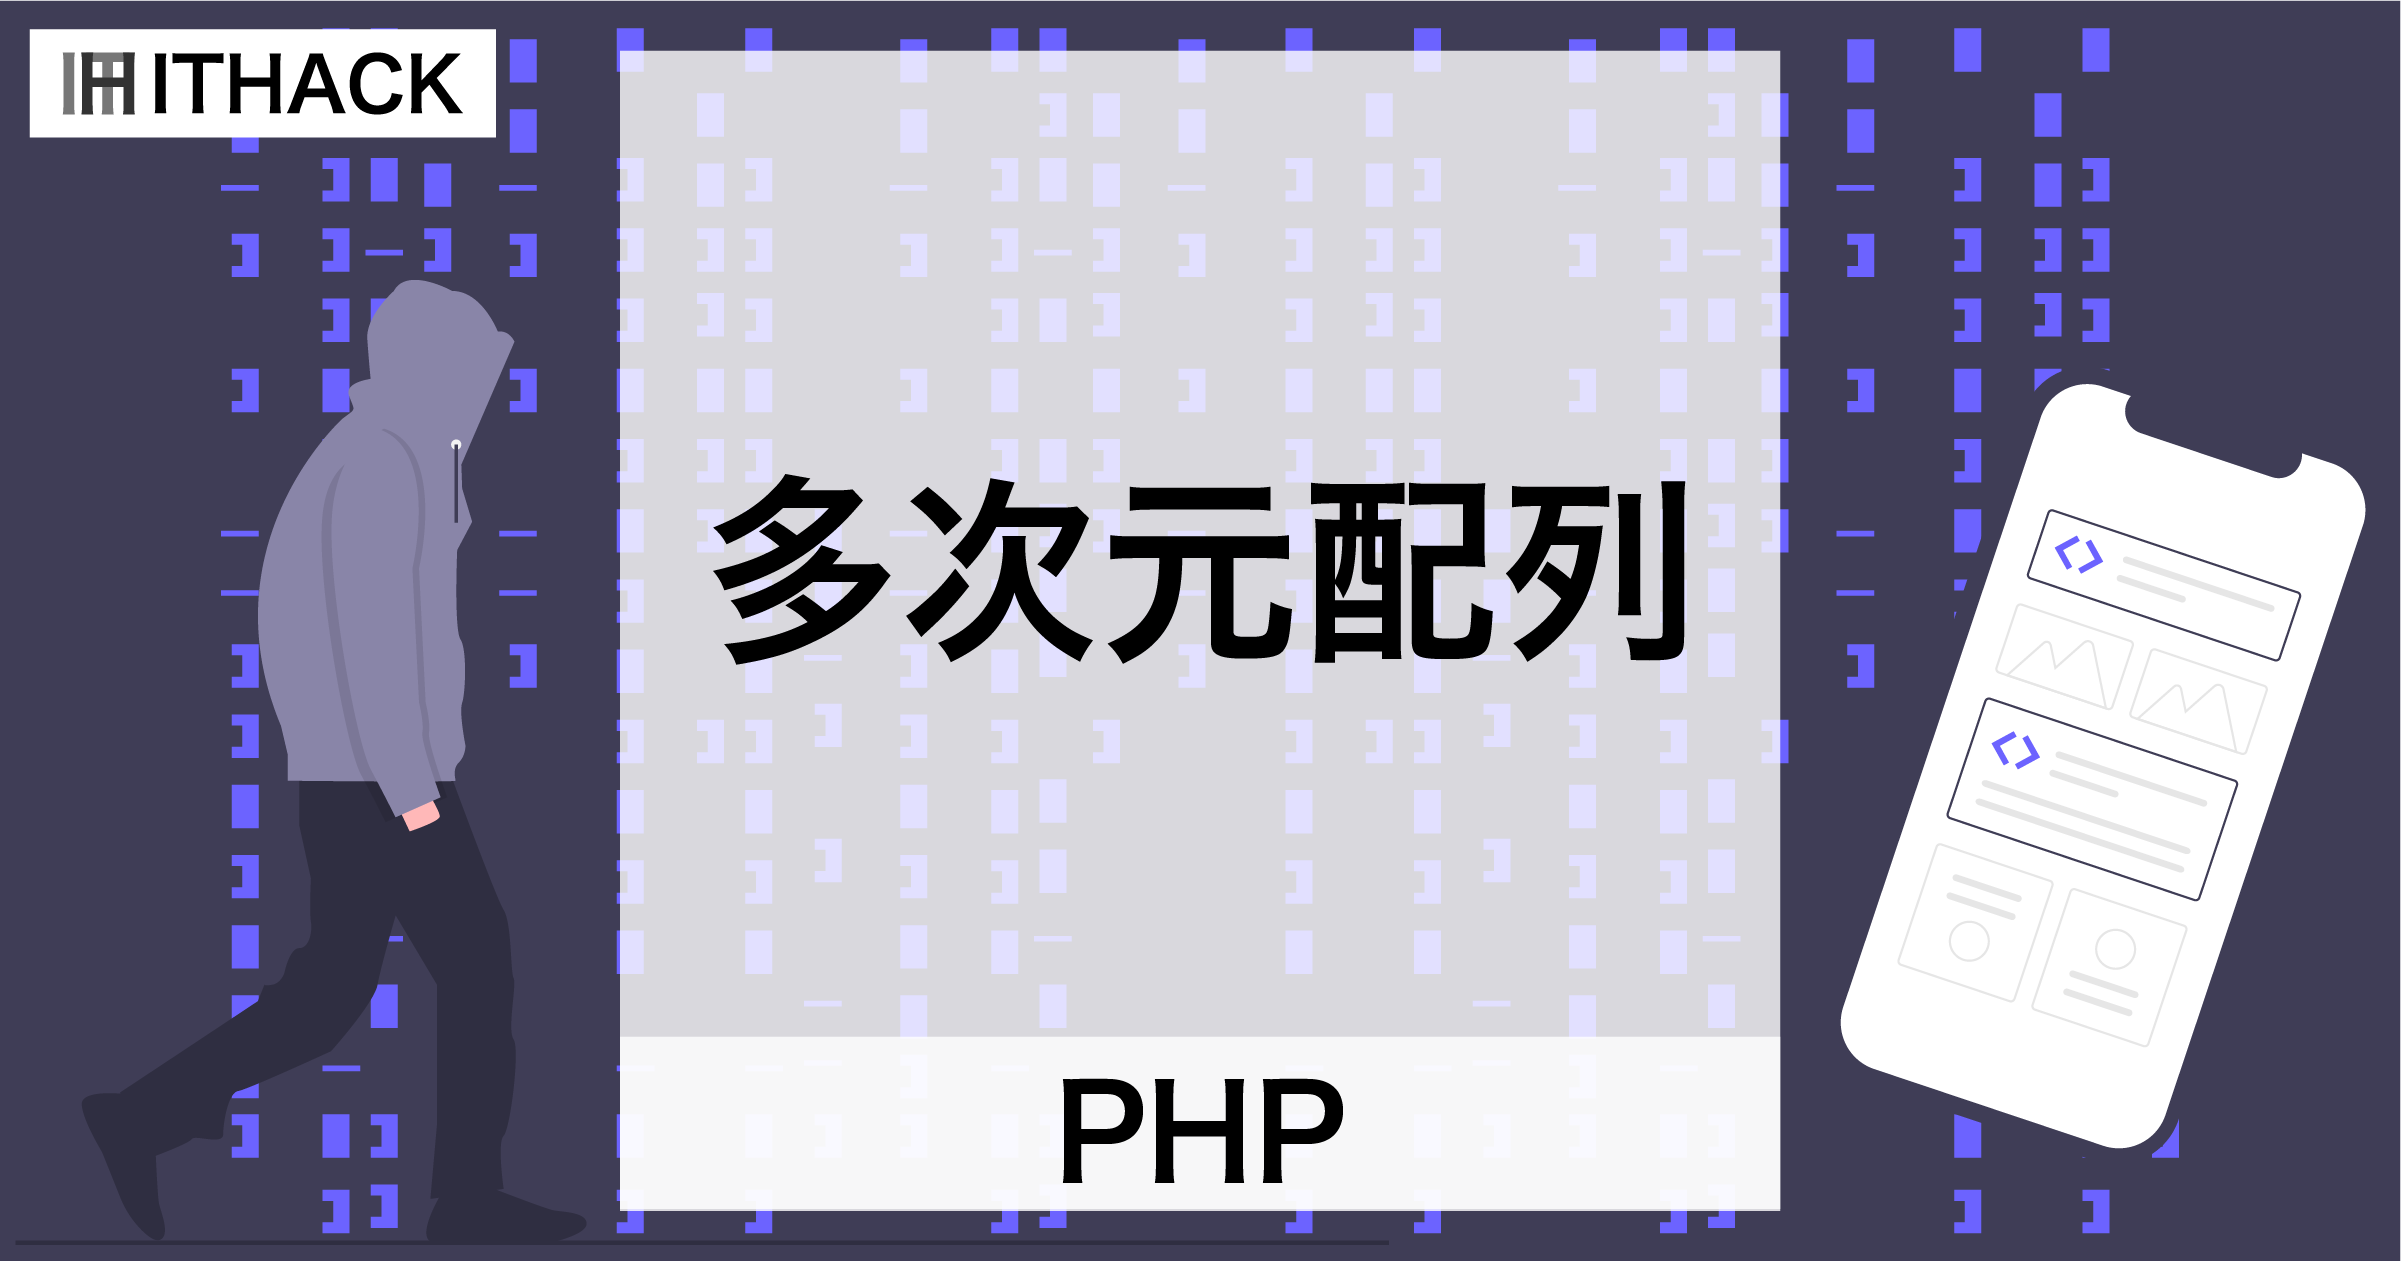 【PHP】多次元配列 - 配列を階層的に記憶するデータ構造